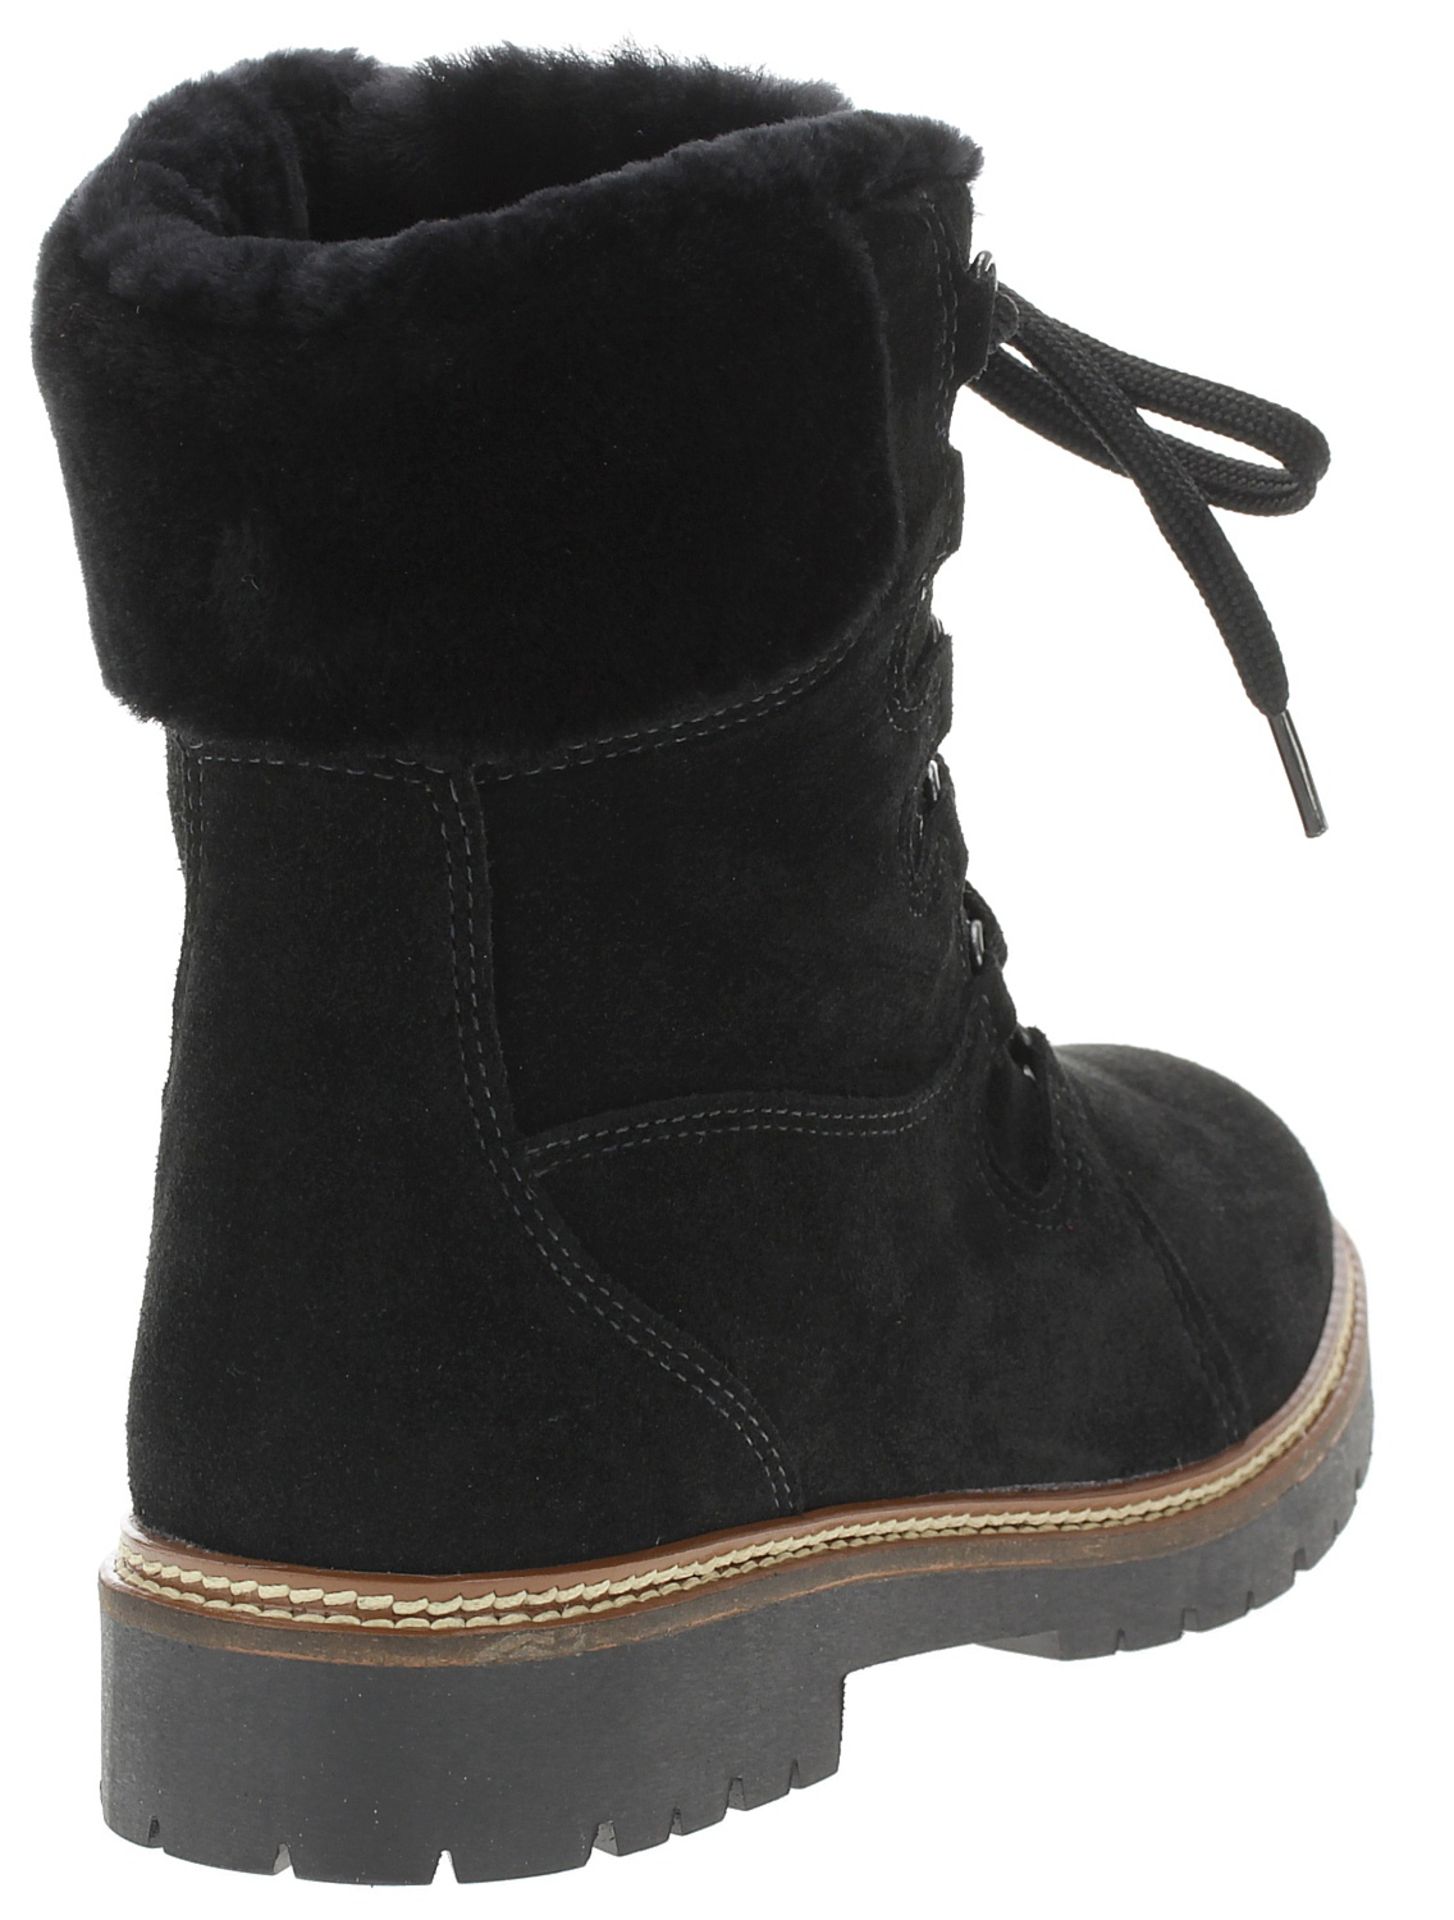 1 x Pair of Designer Olang Meribel 81 Nero Women's Winter Boots - Euro Size 41 - Brand New Boxed - Image 5 of 8